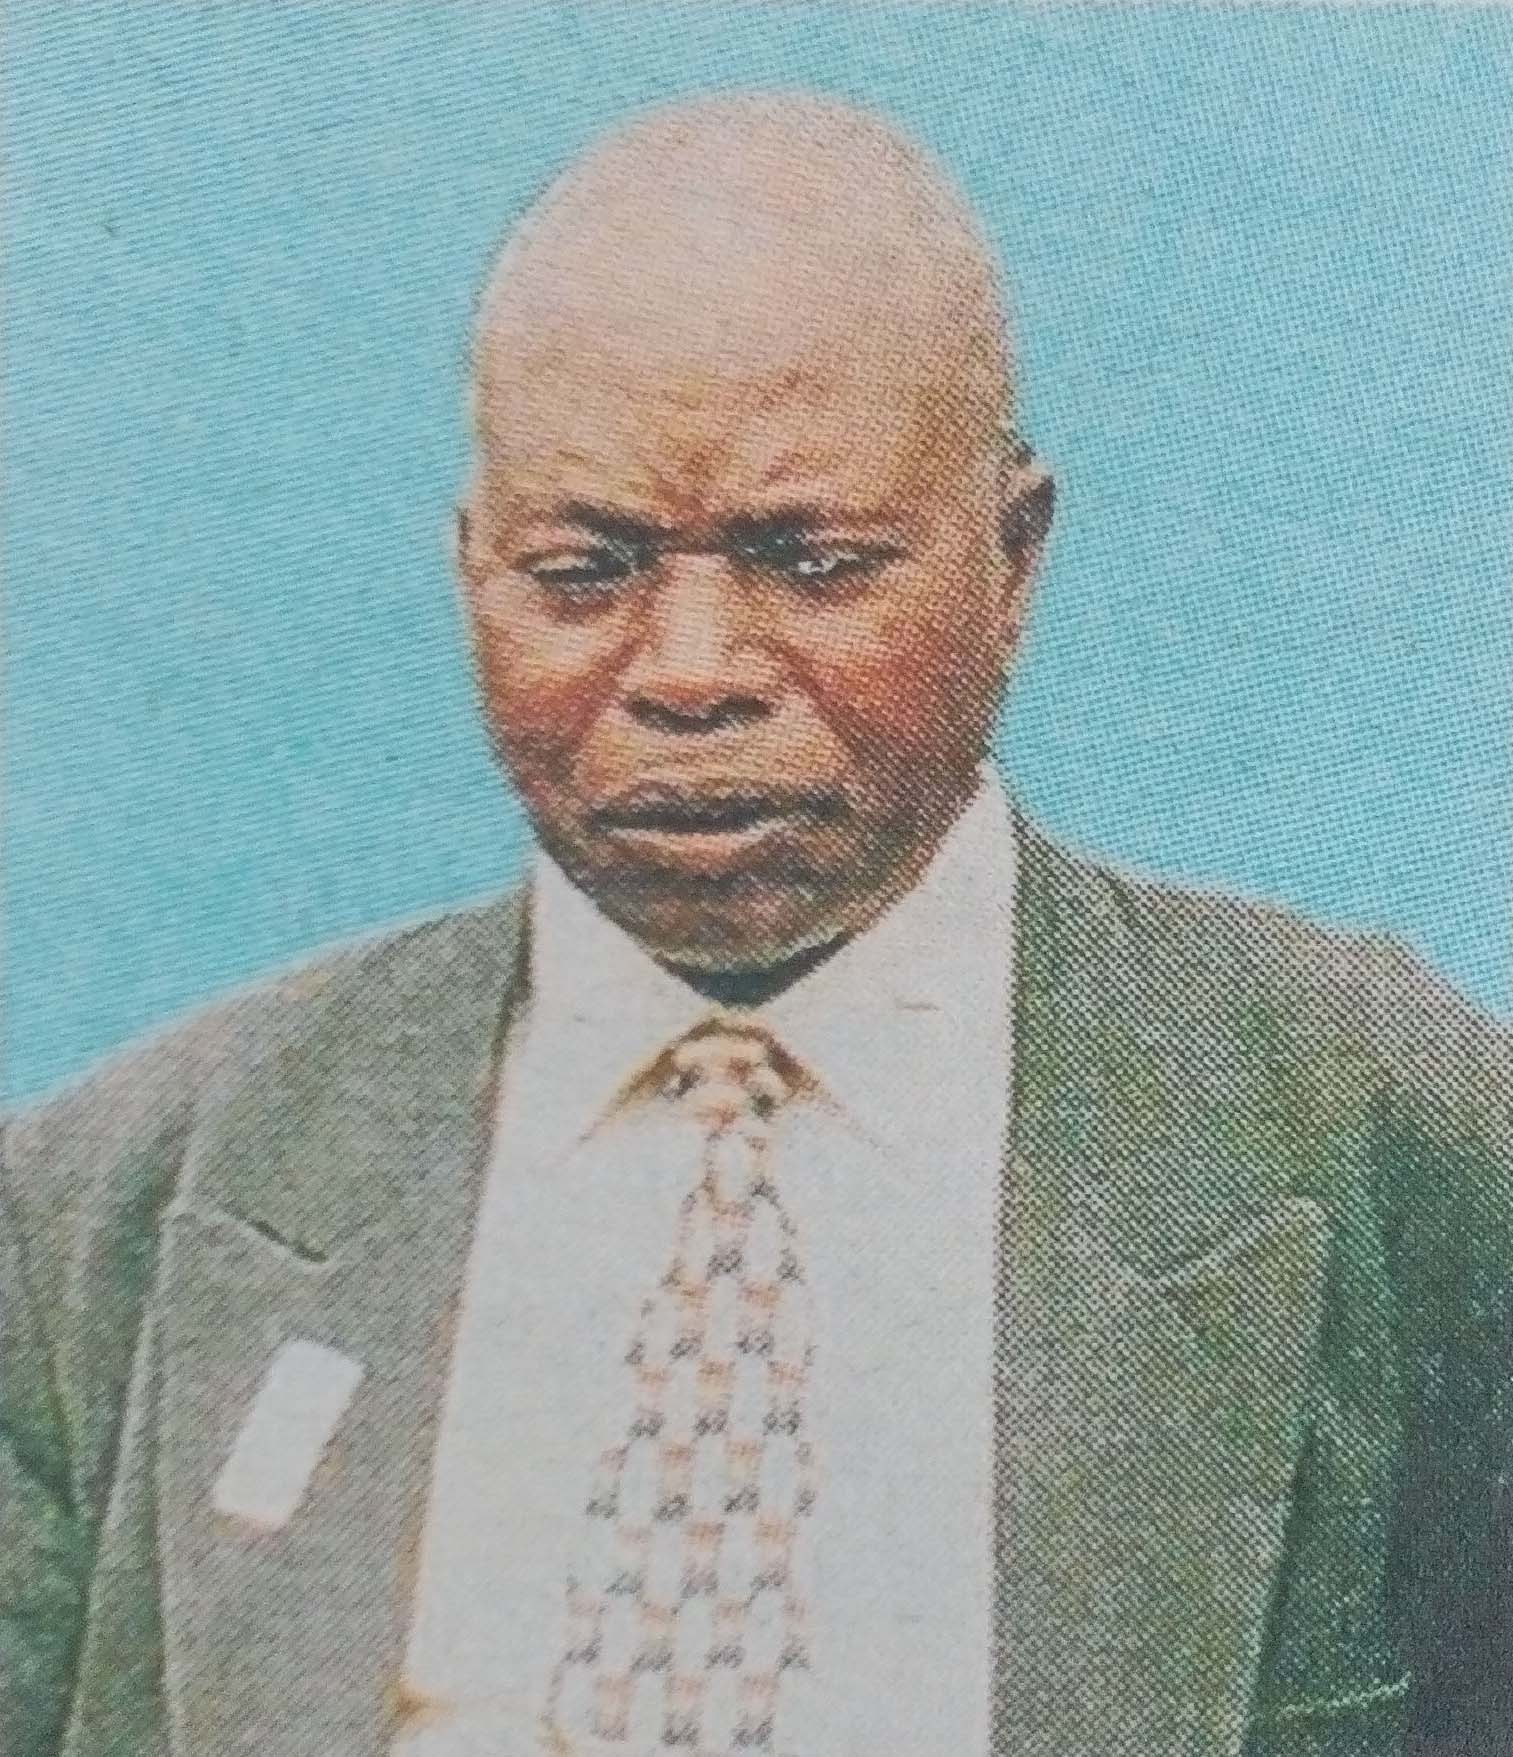 Obituary Image of Daniel Gichangi Wang'ombe (Wangungu)